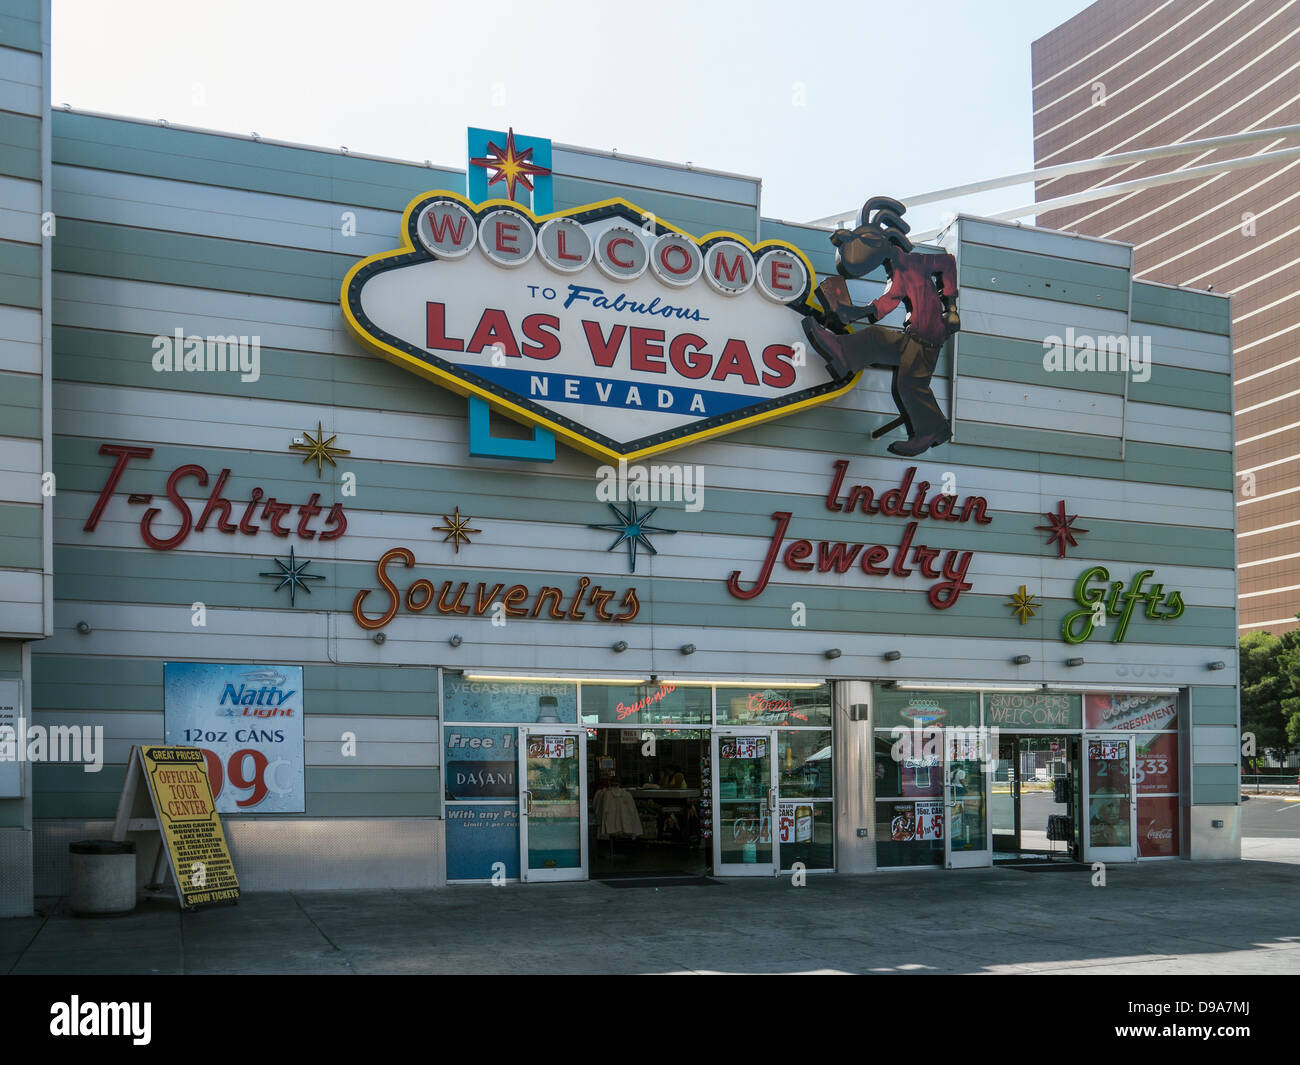 Las Vegas Gift Shop on Las Vegas Boulevard Stock Photo - Alamy